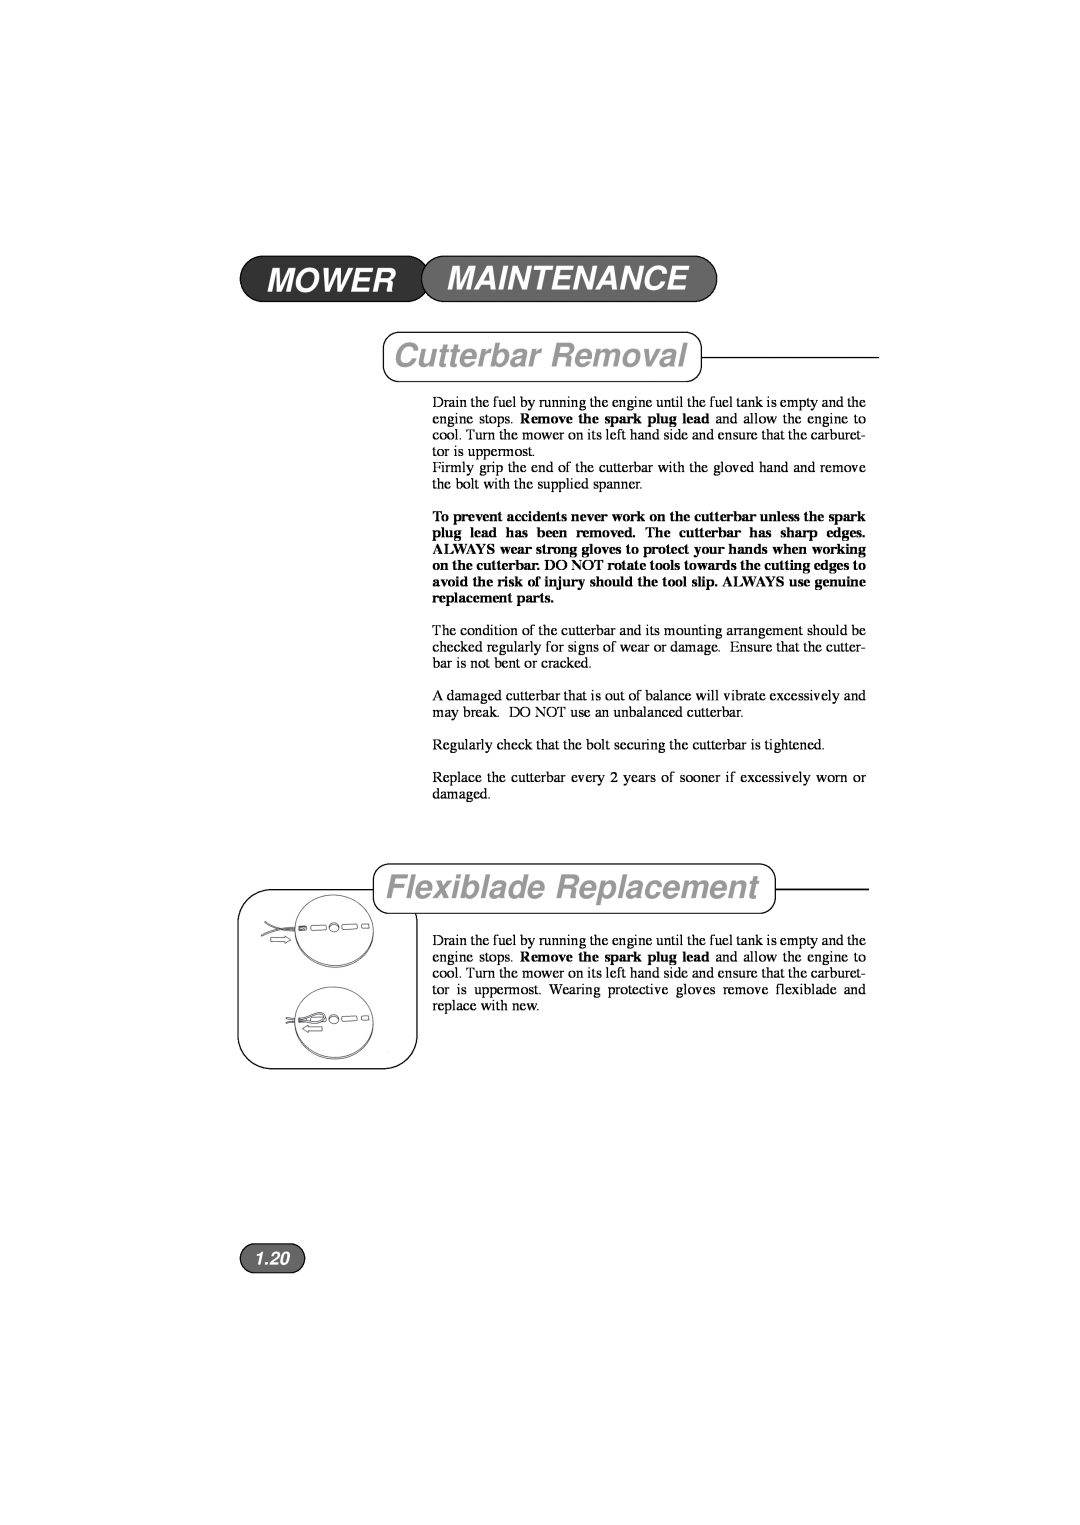 Hayter Mowers 453, 450, 446 Hovertrim manual Cutterbar Removal, Flexiblade Replacement, 1.20, Mower Maintenance 